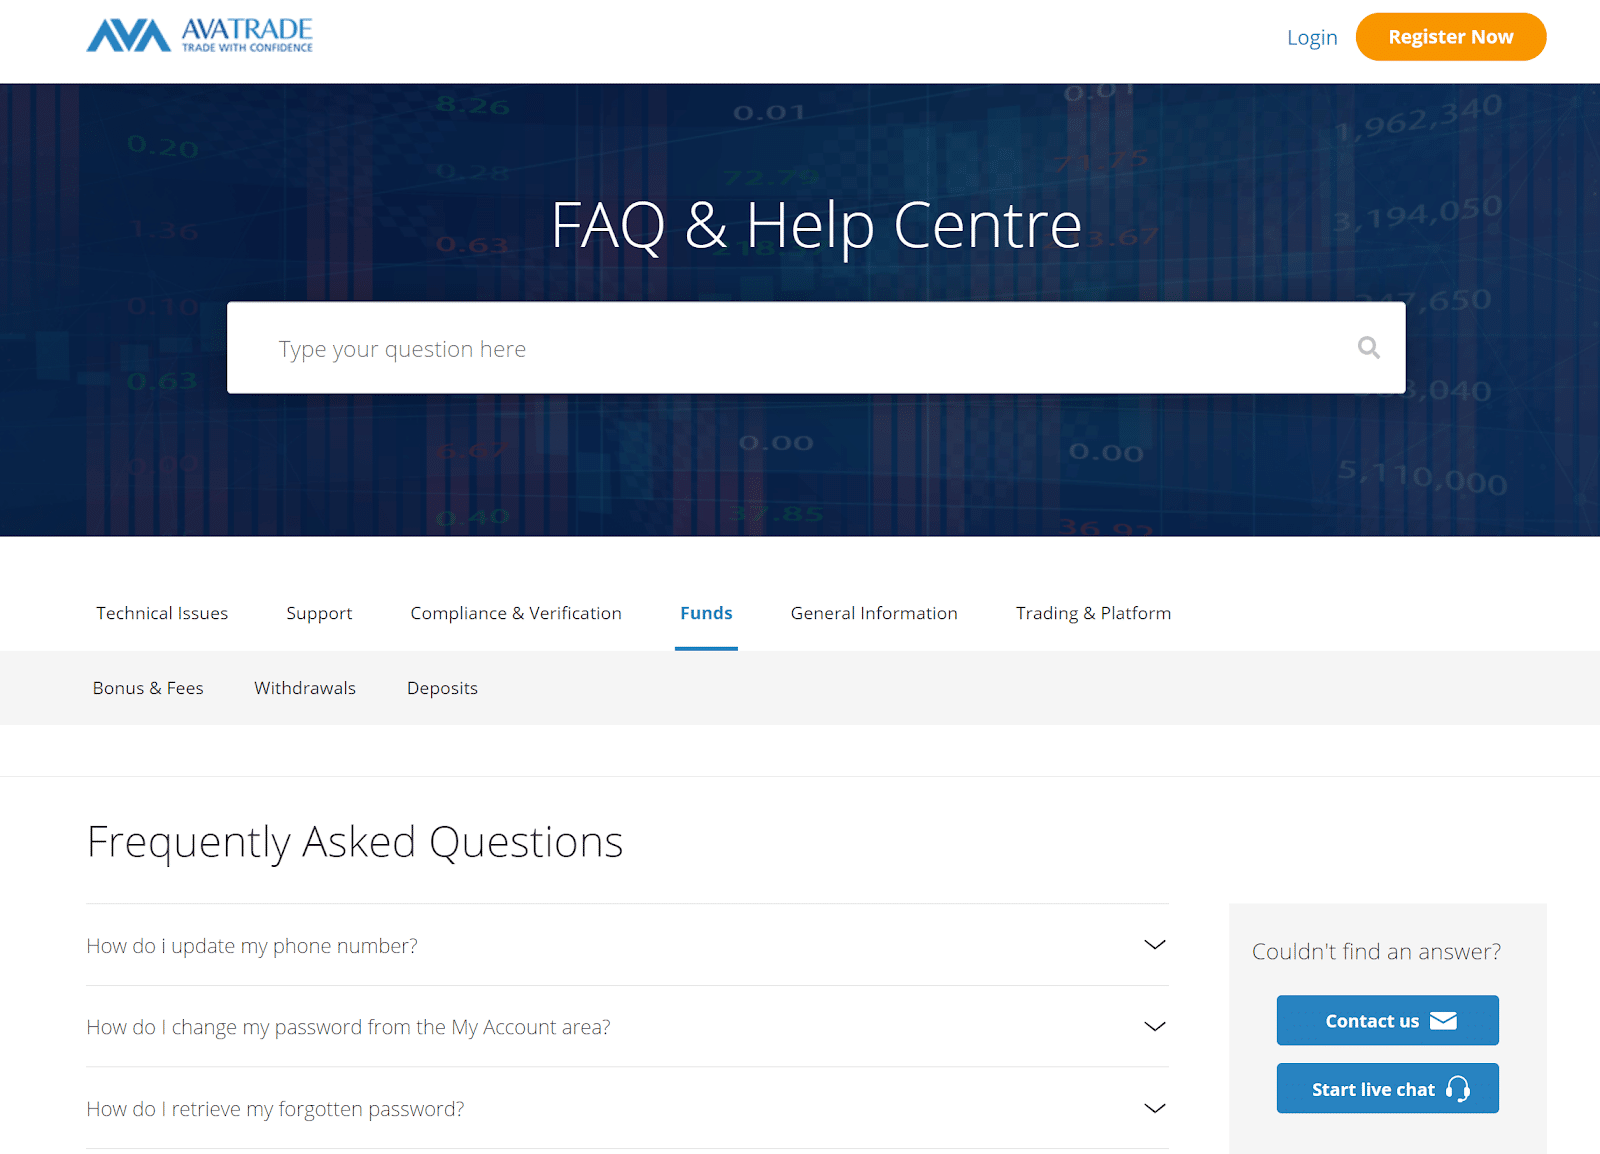 Avatrade FAQ page